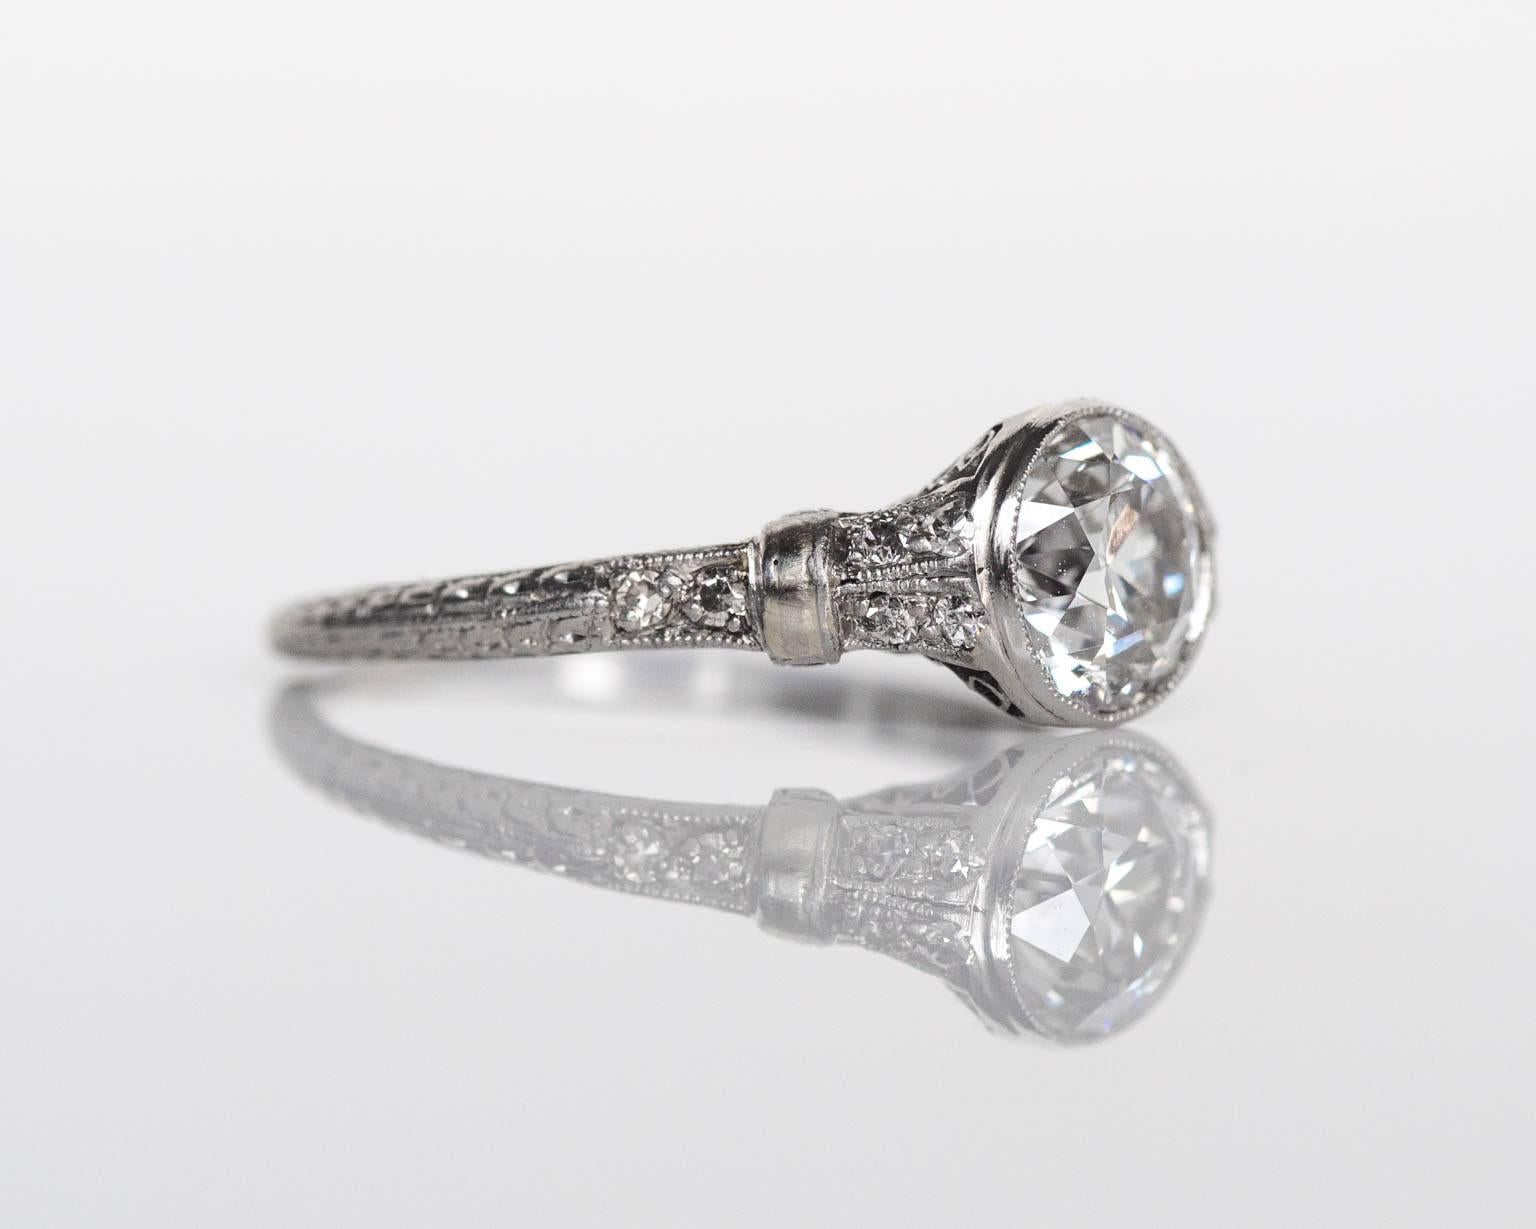 1920s Art Deco Platinum 1.01 carat Diamond Engagement Ring with Side Stones 5